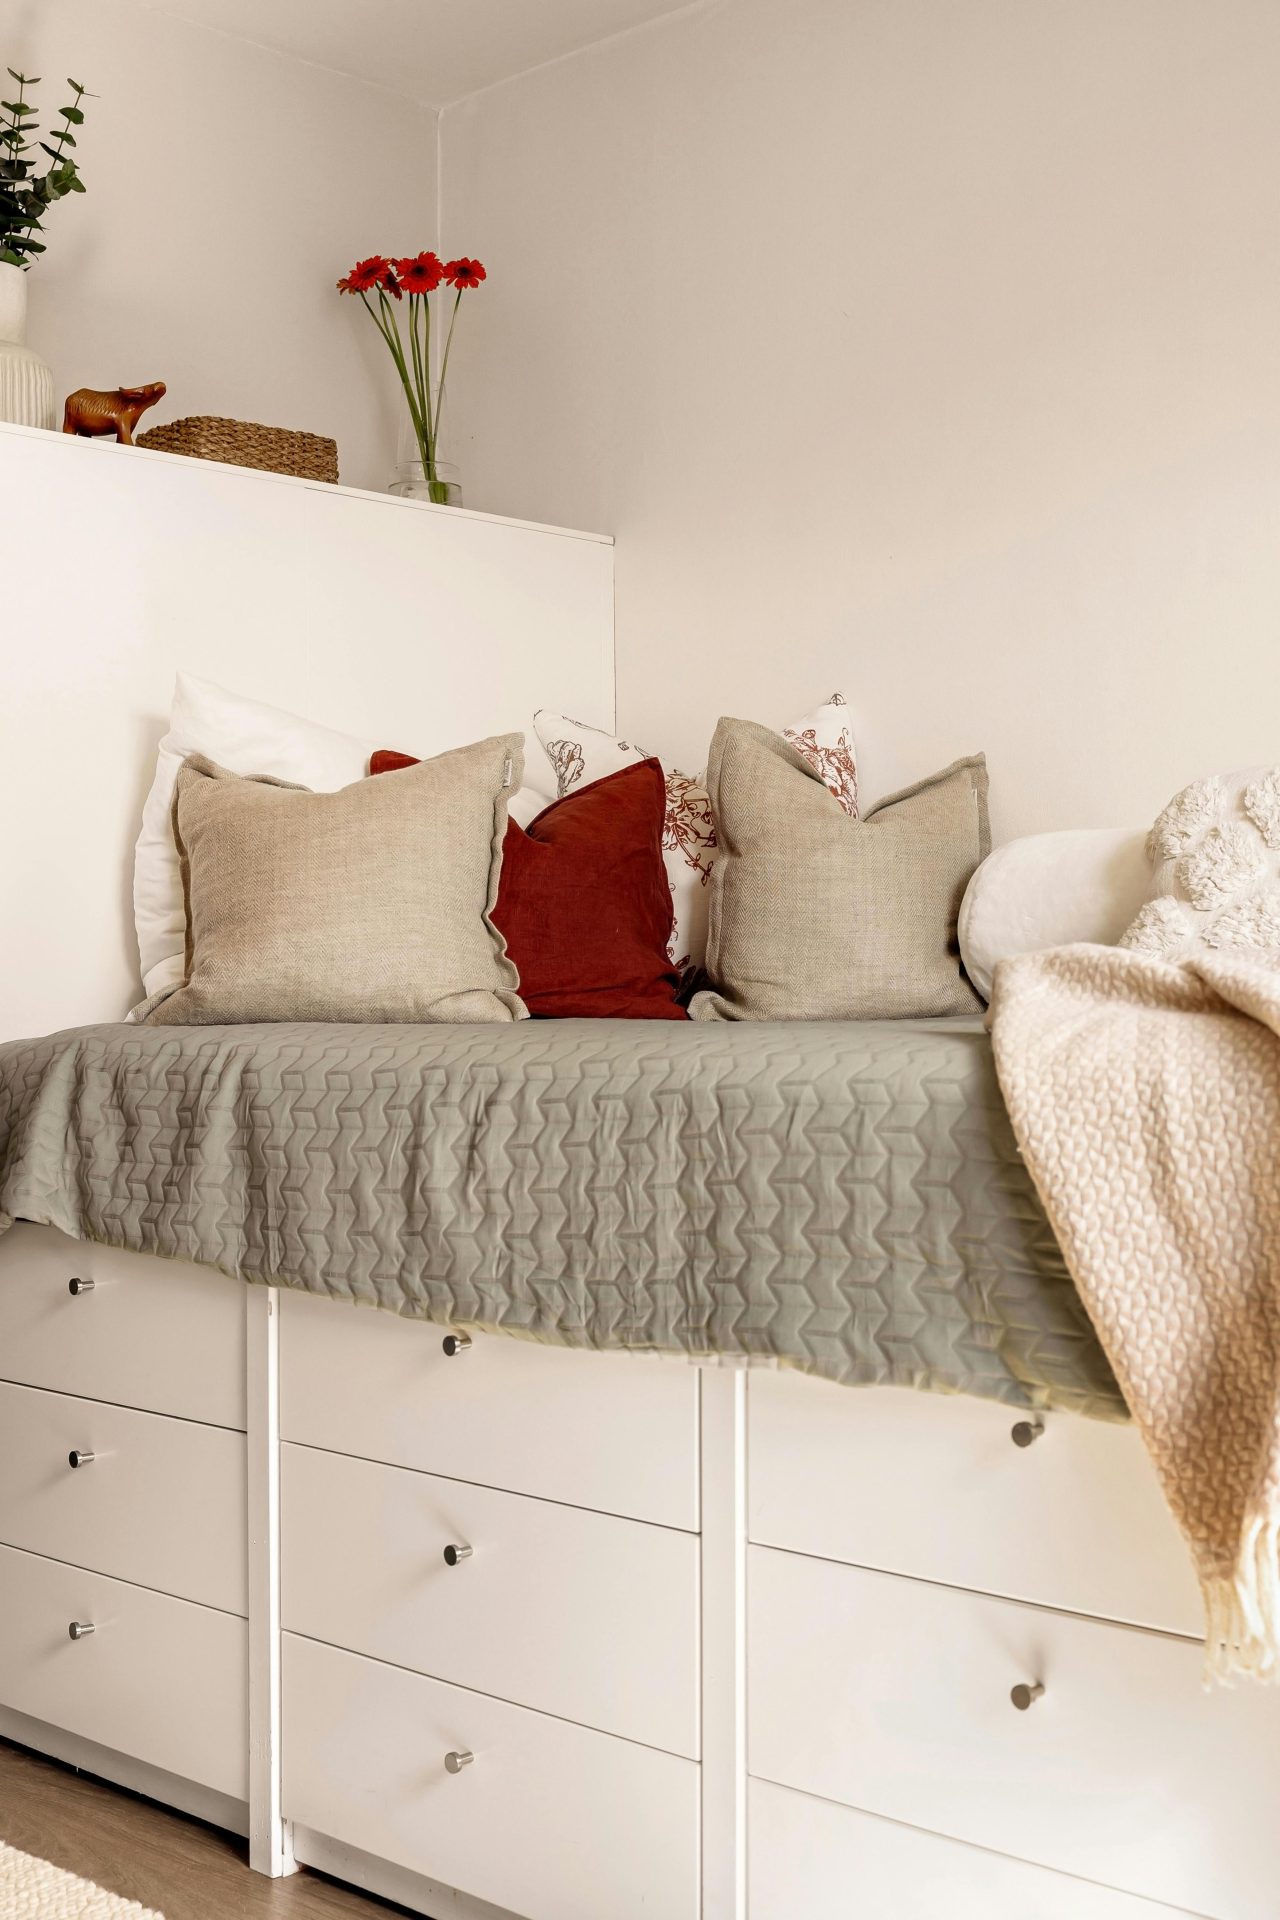 Benefits of a Cozy Bedroom Retreat